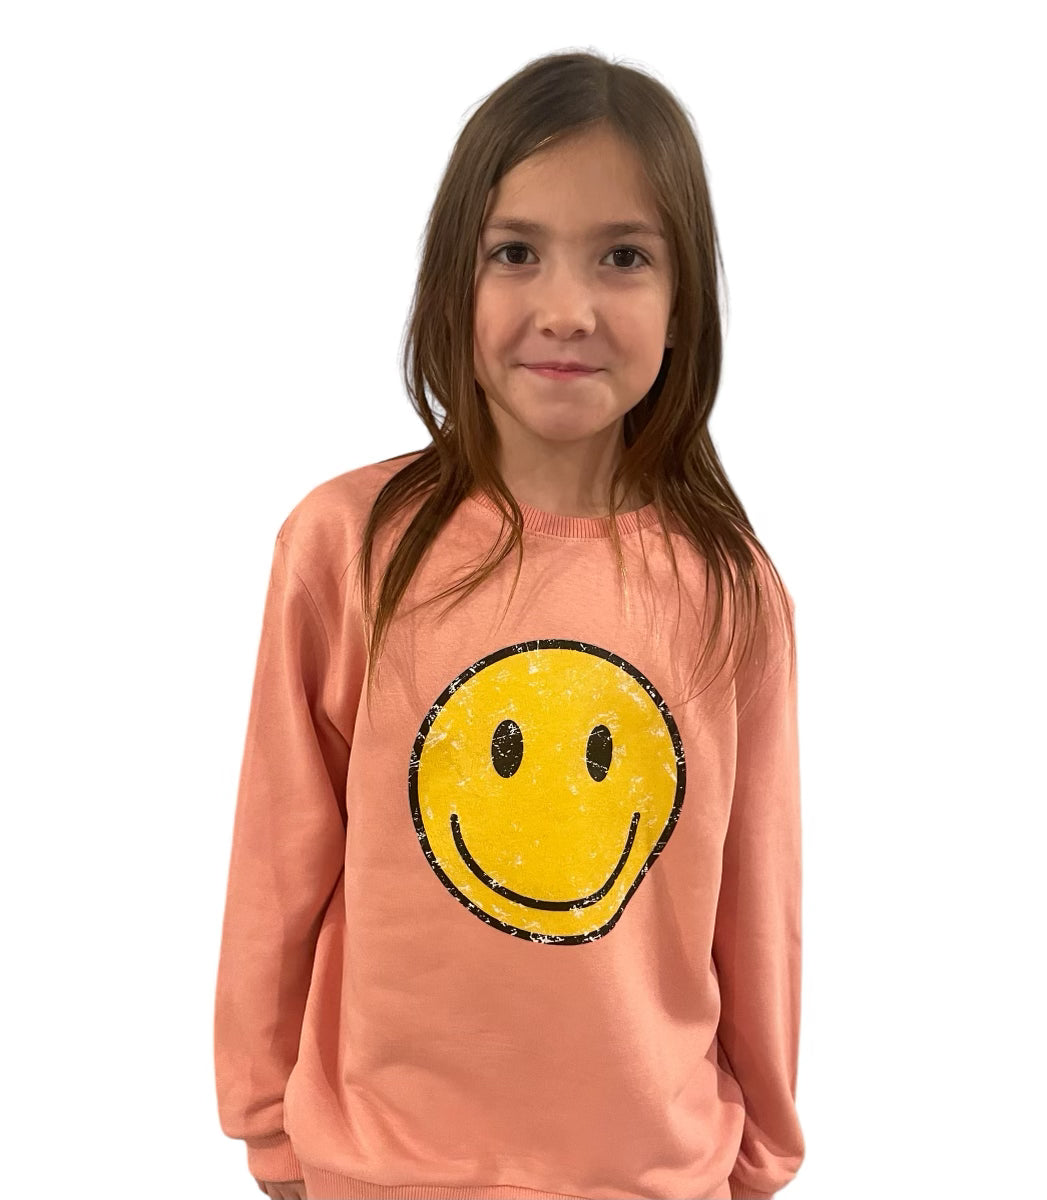 Smile Graphic Sweatshirt